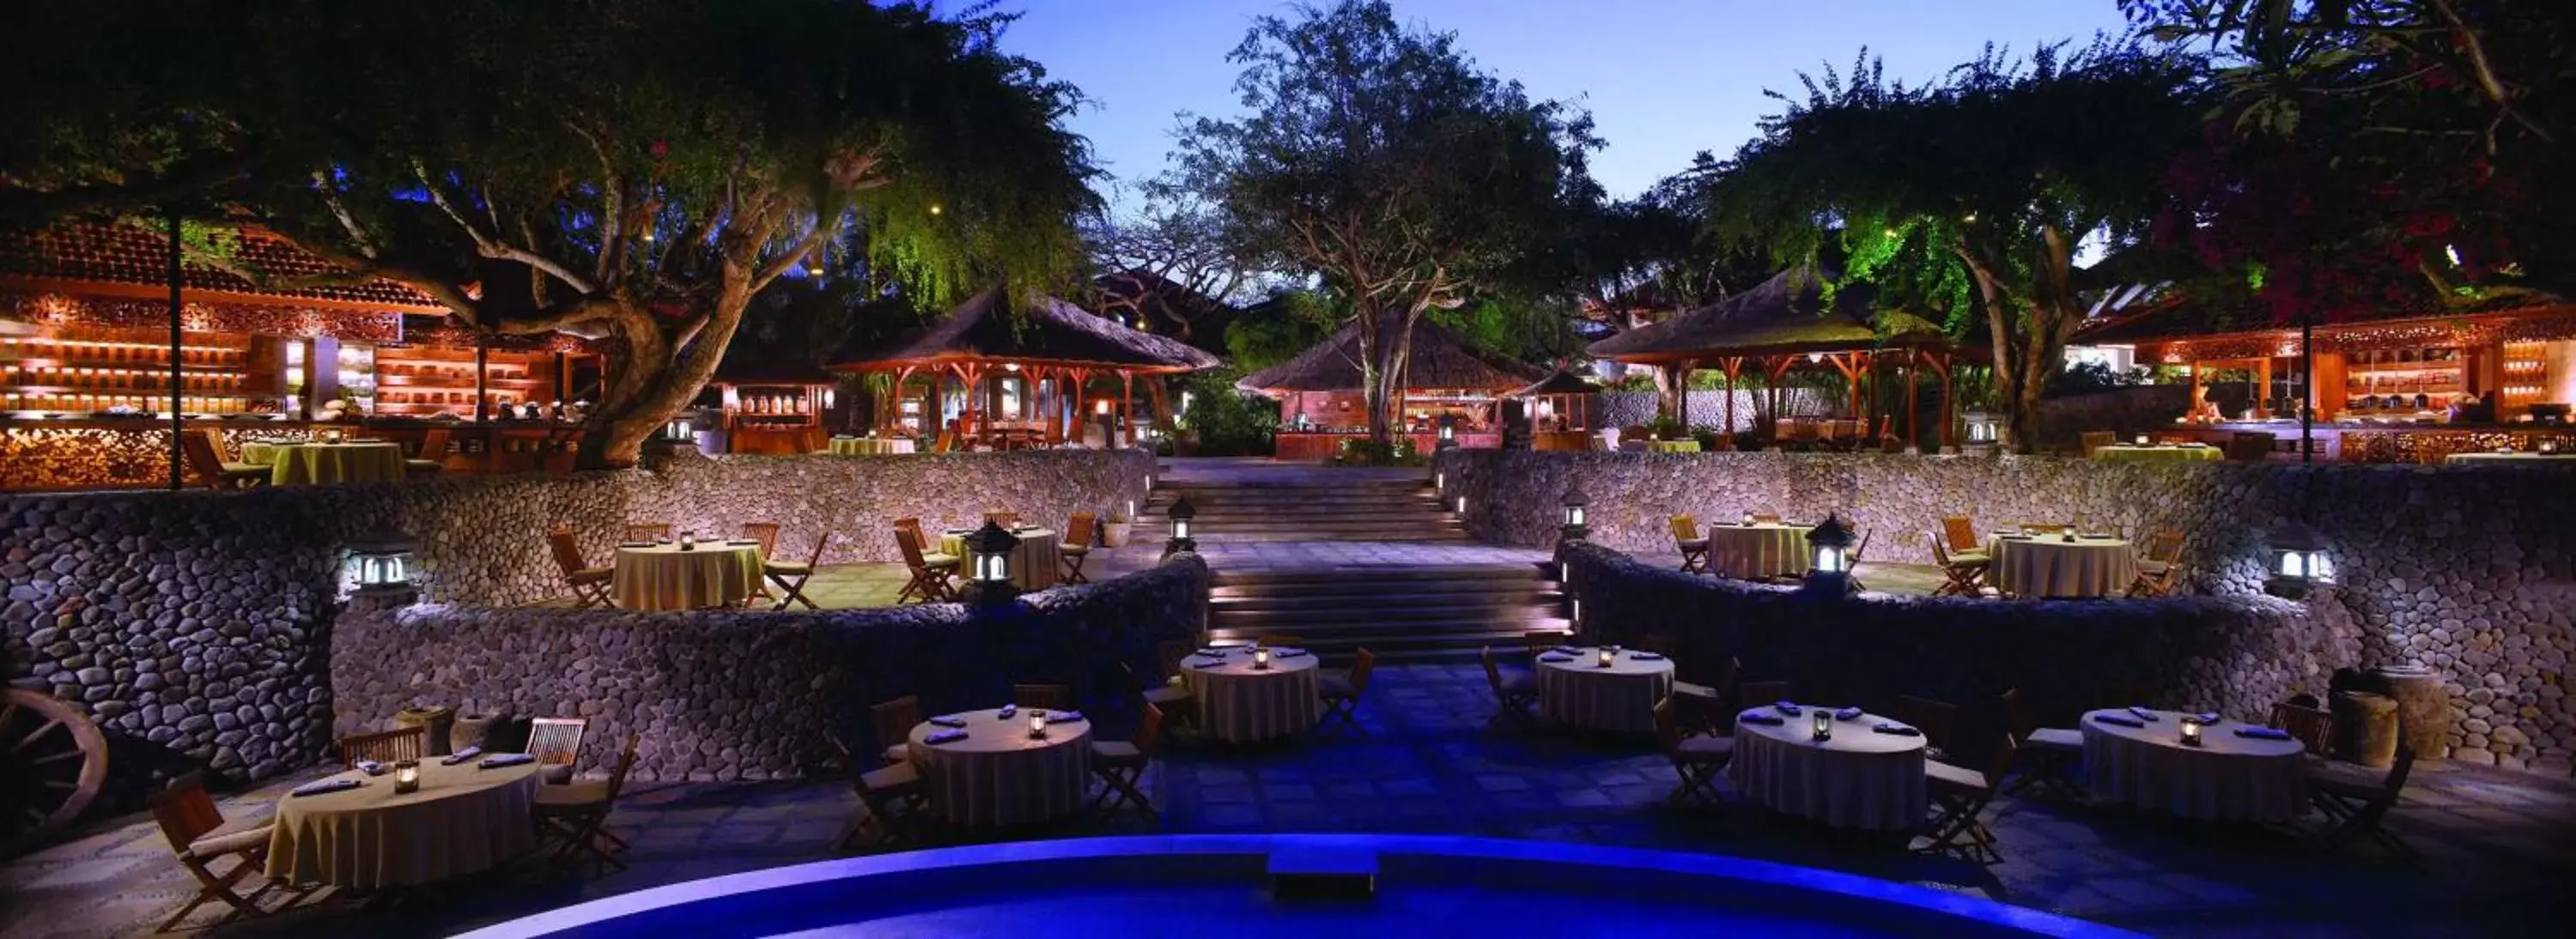 Restaurant/places to eat in Grand Hyatt Bali